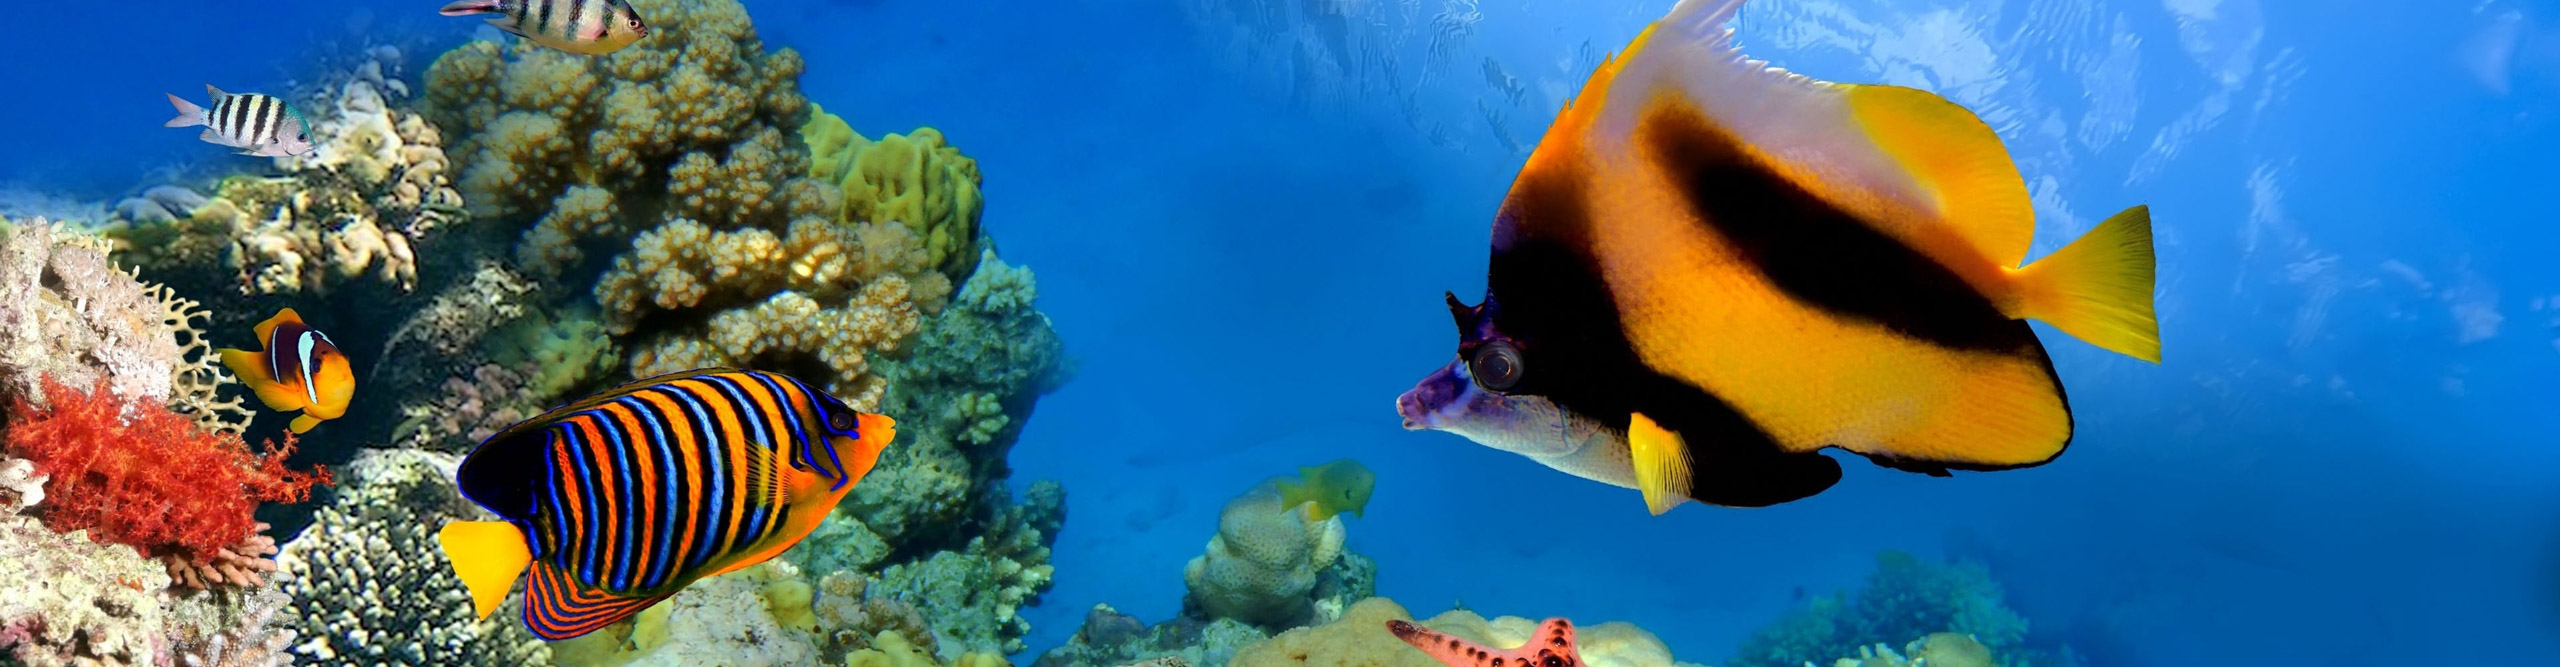 Tropical fish underwater in the Great Barrier Reef, Queensland, Australia 